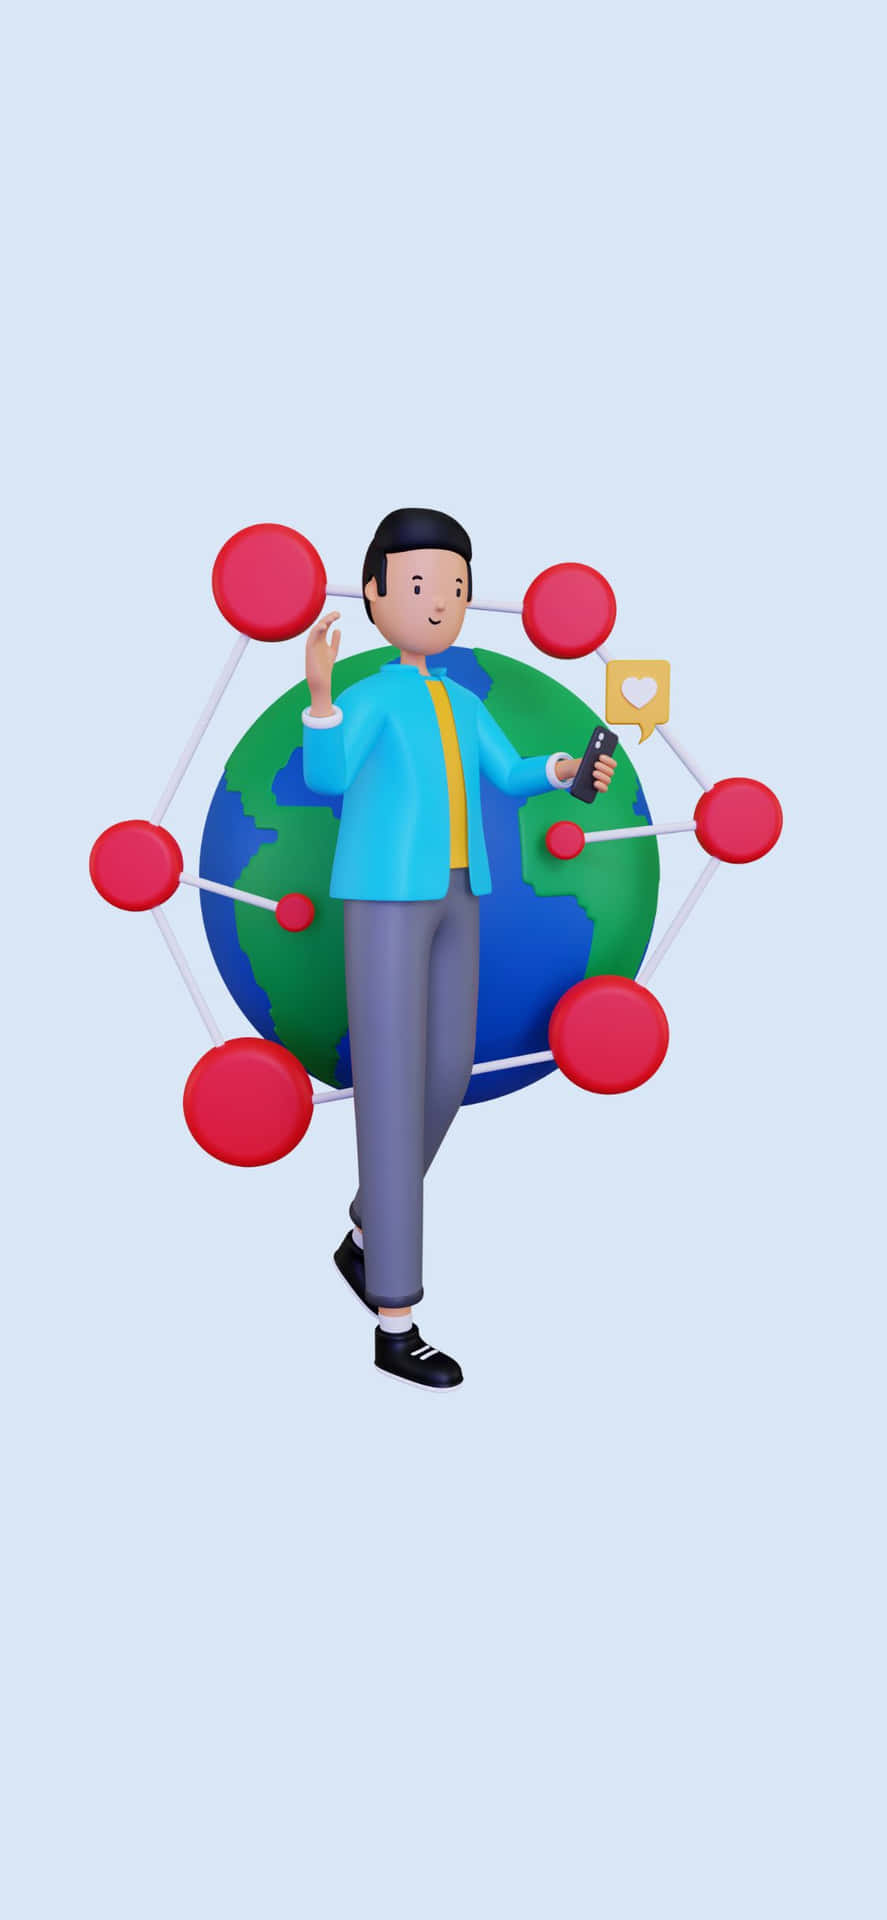 A Cartoon Man With A Globe And A Phone